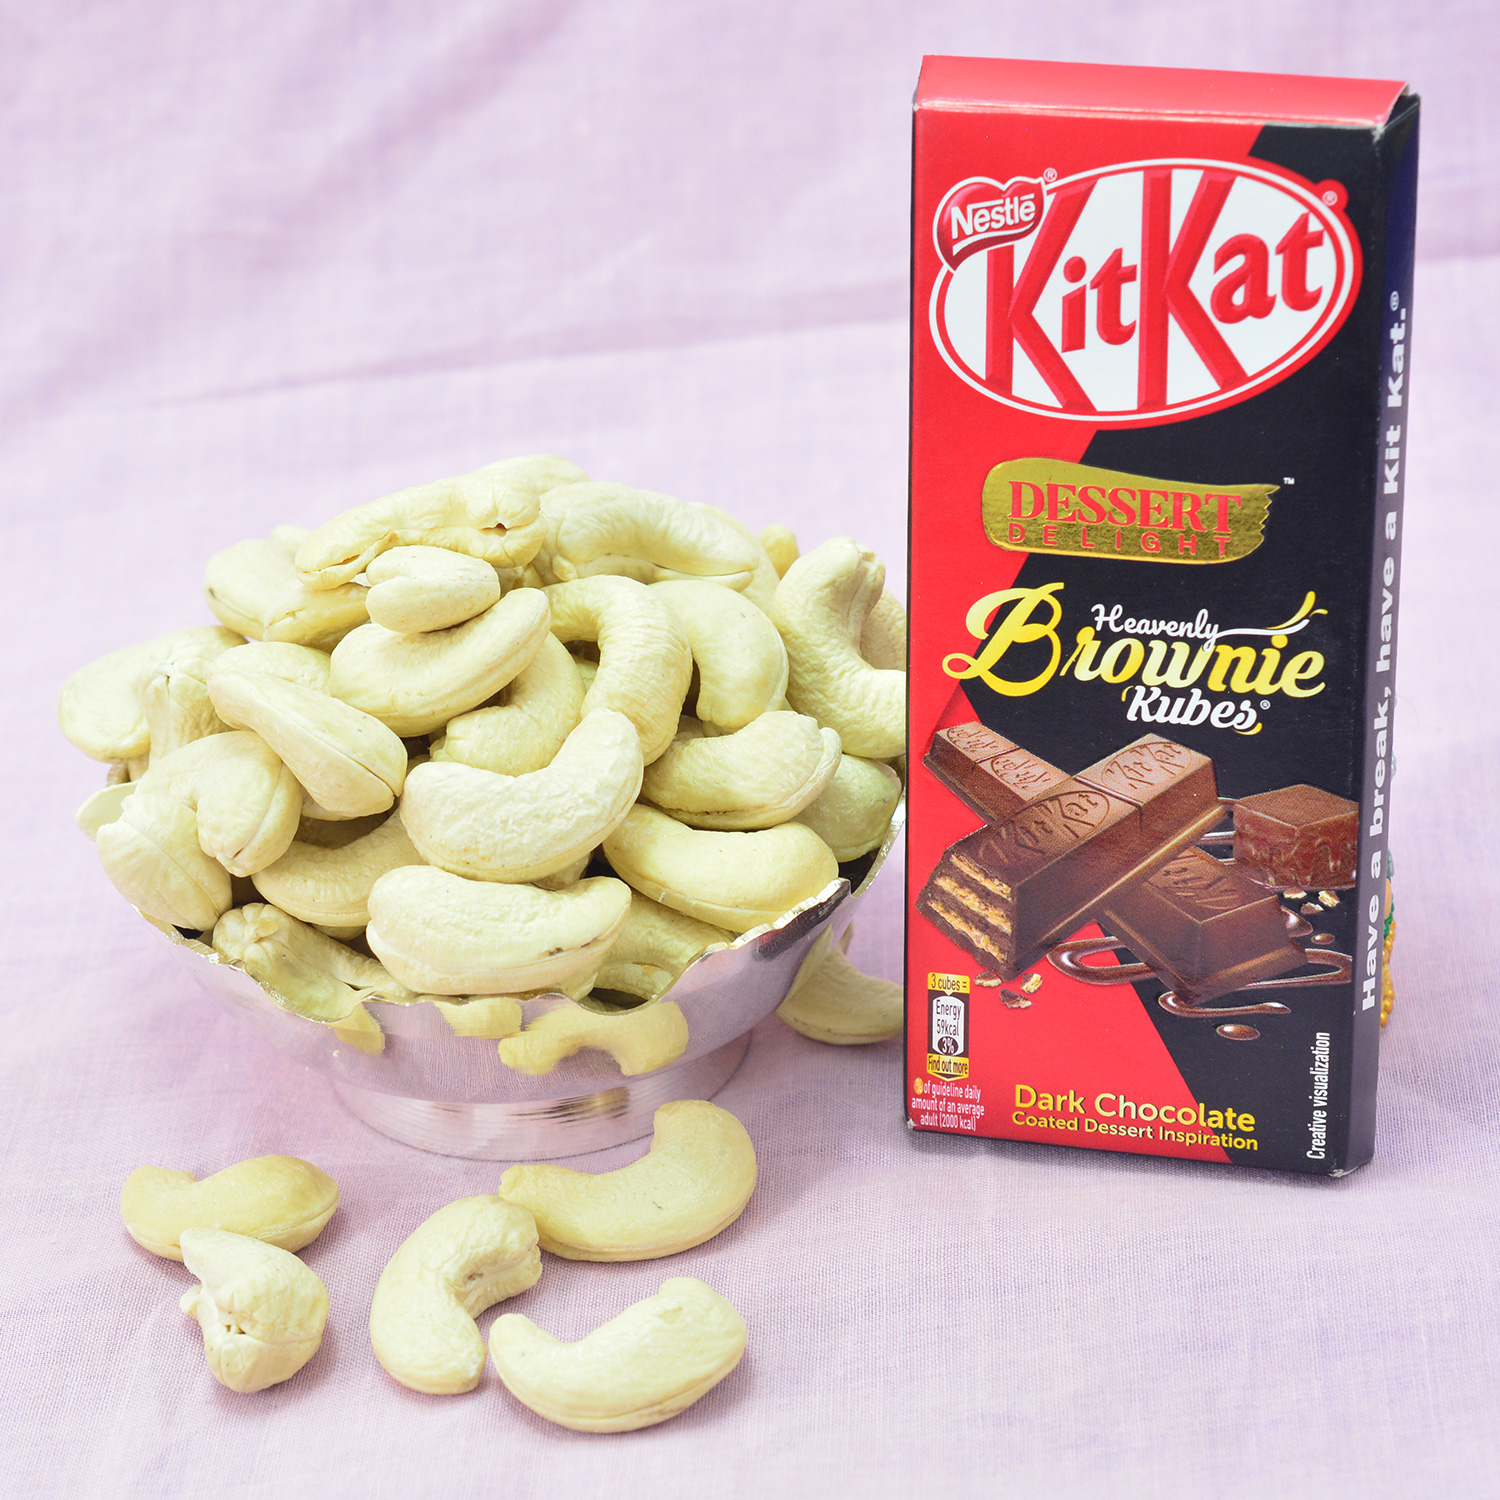 Delicious Fresh Branded Kaju Dry Fruit with Kitkat Brownie 